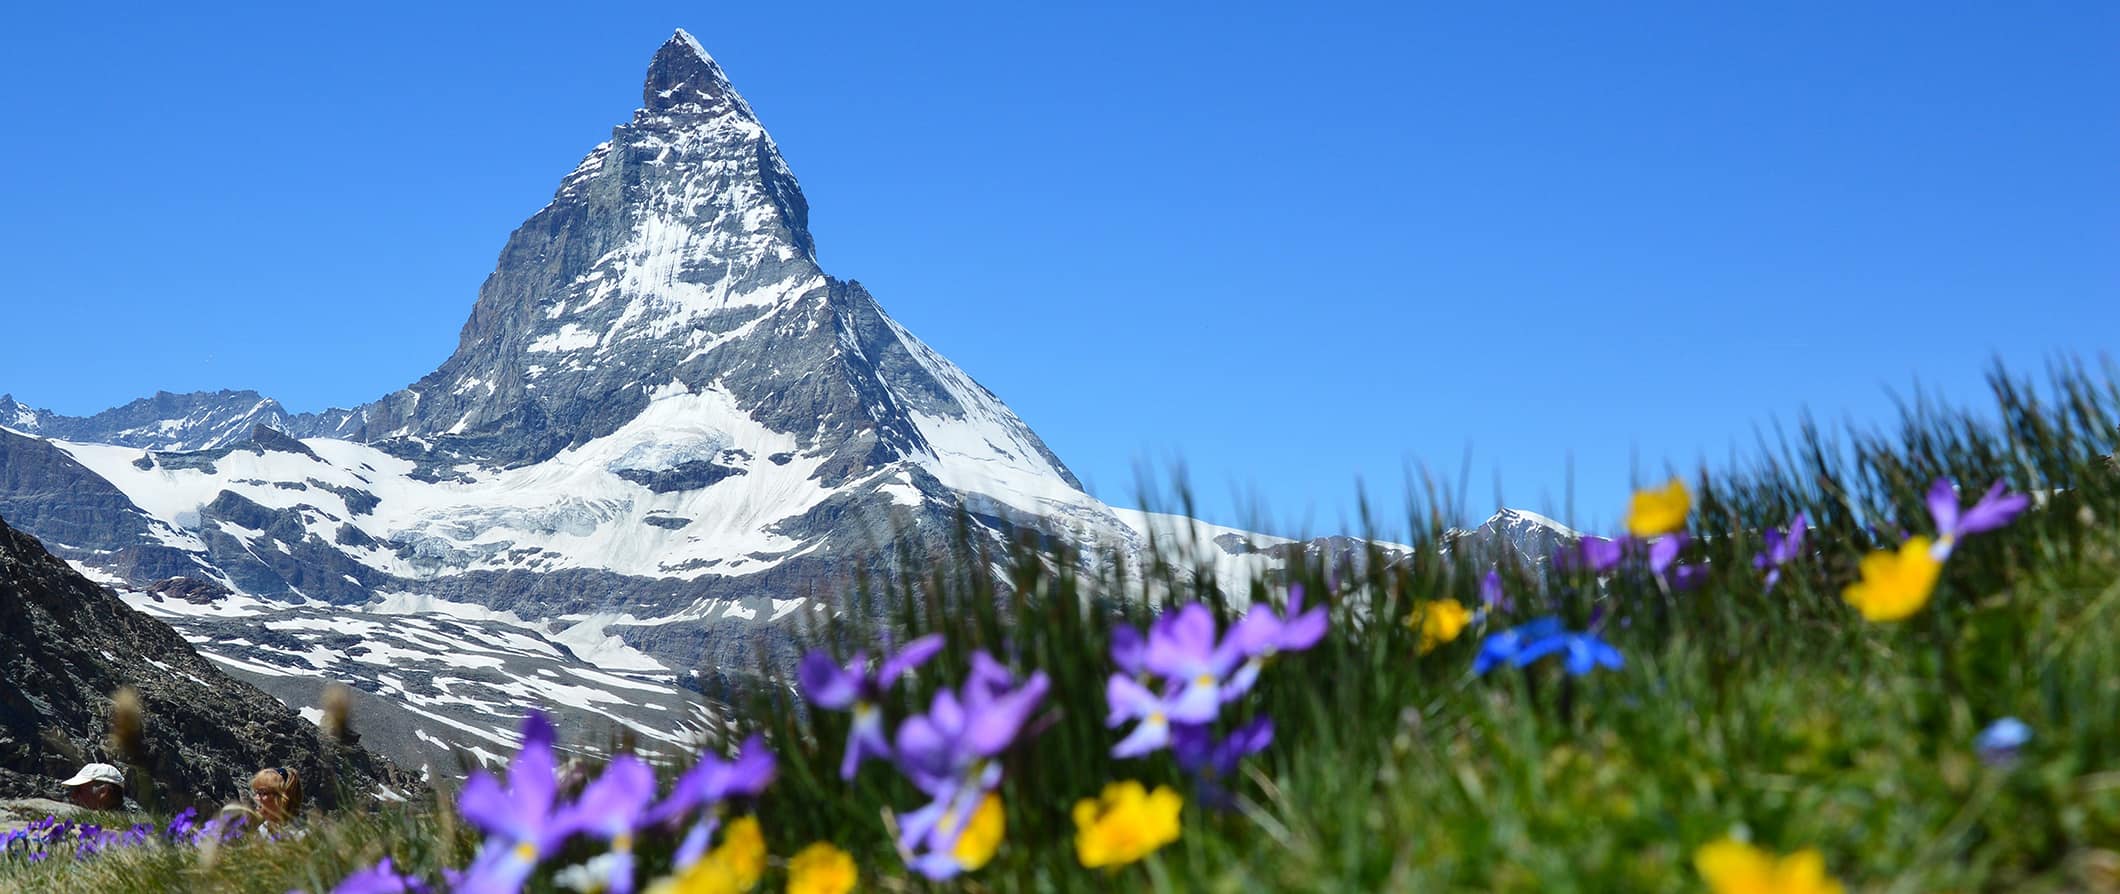 2019 Switzerland Travel Guide: Activities, Costs, Ways to Save ...